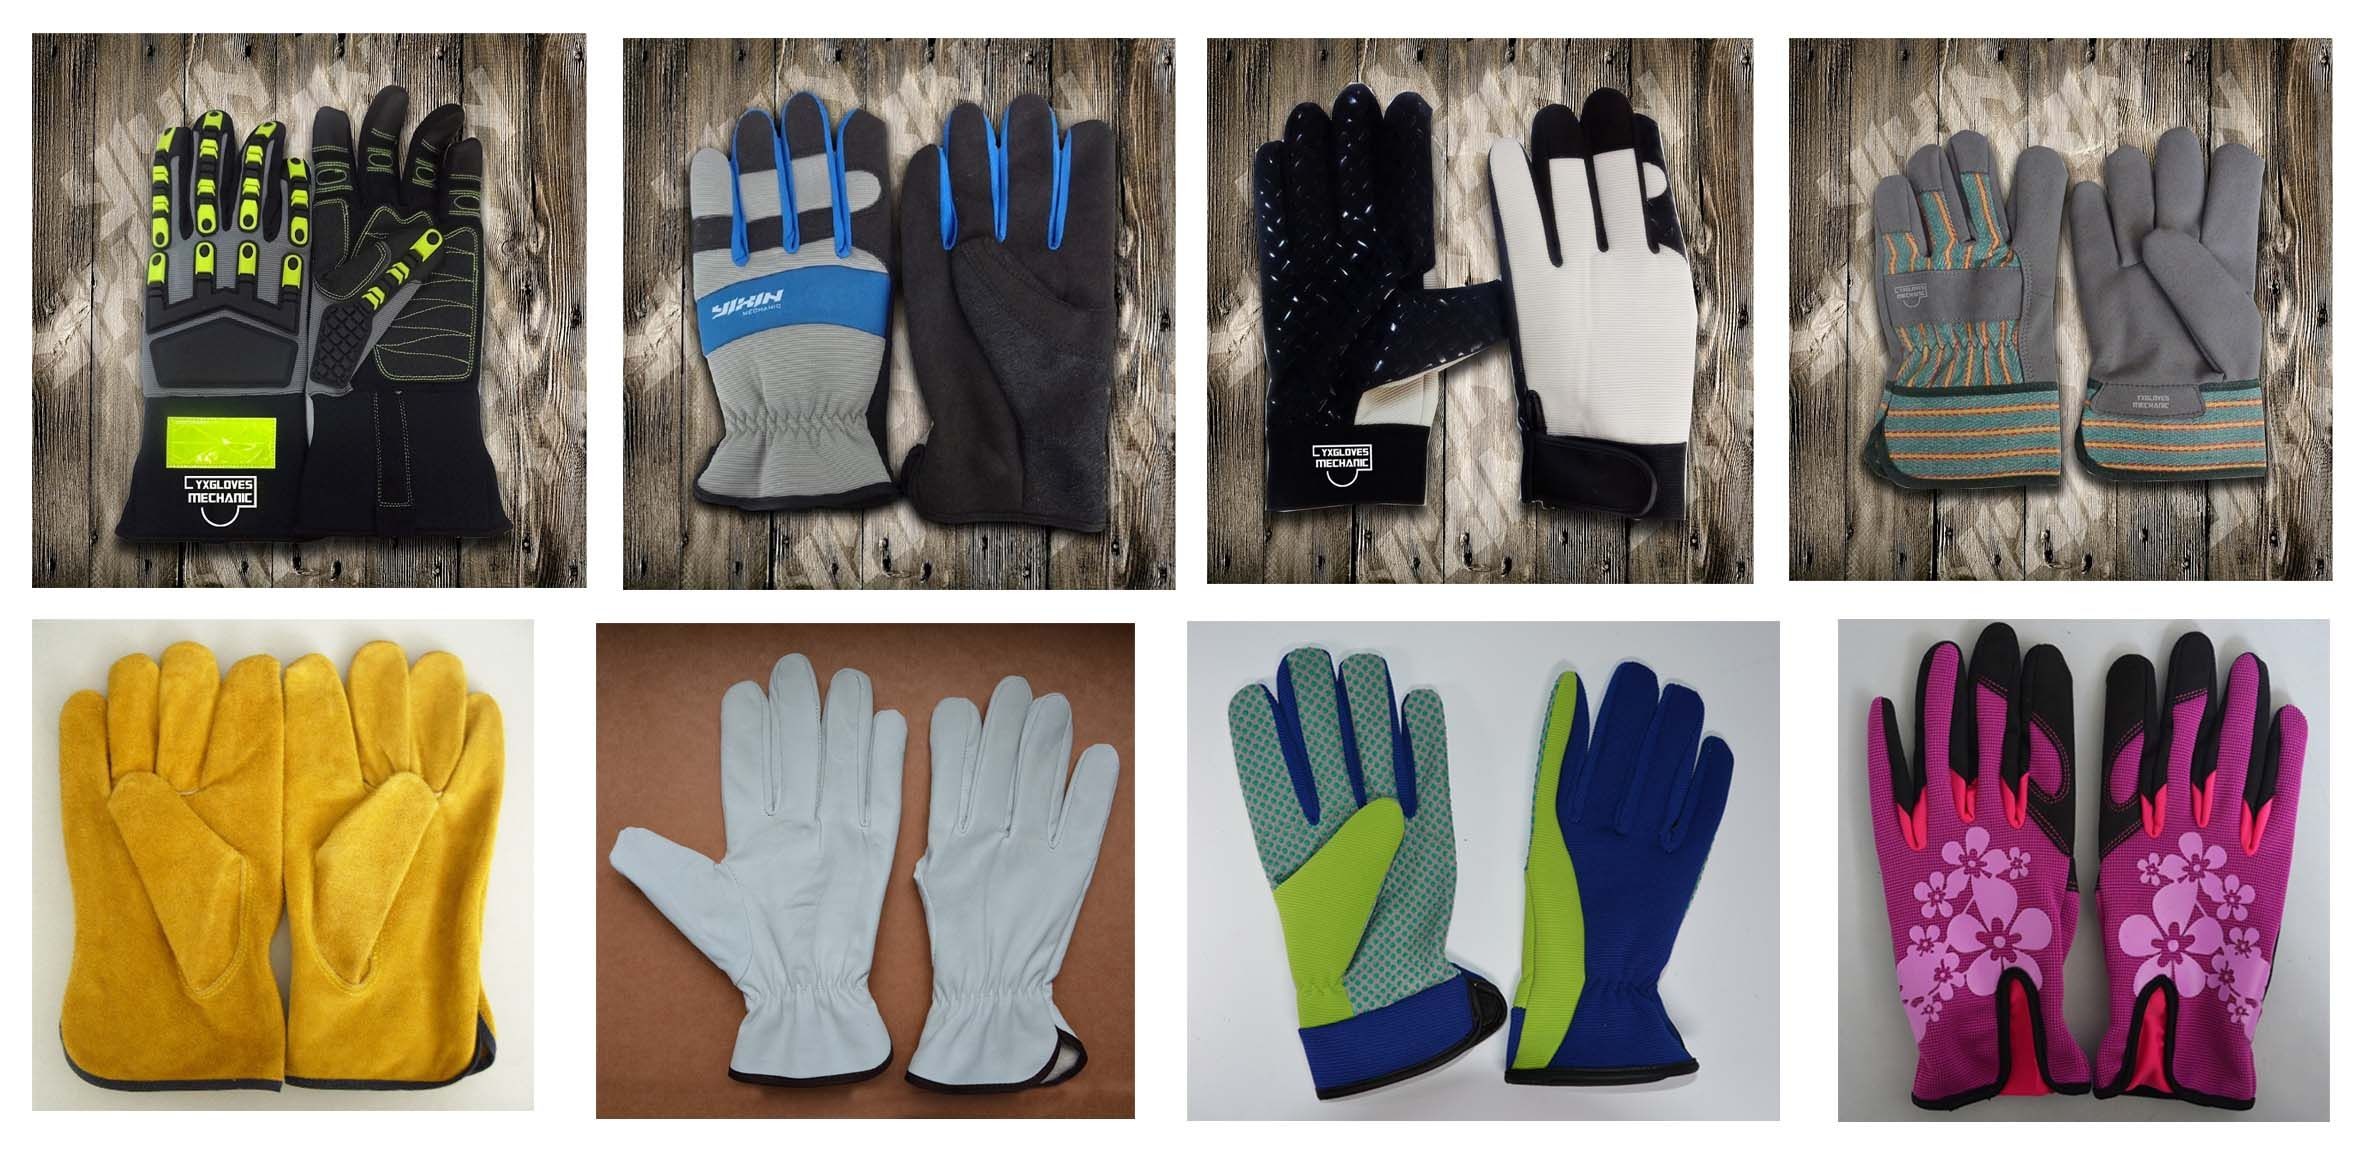 Datian Yixin Gloves & Garments Co., Ltd